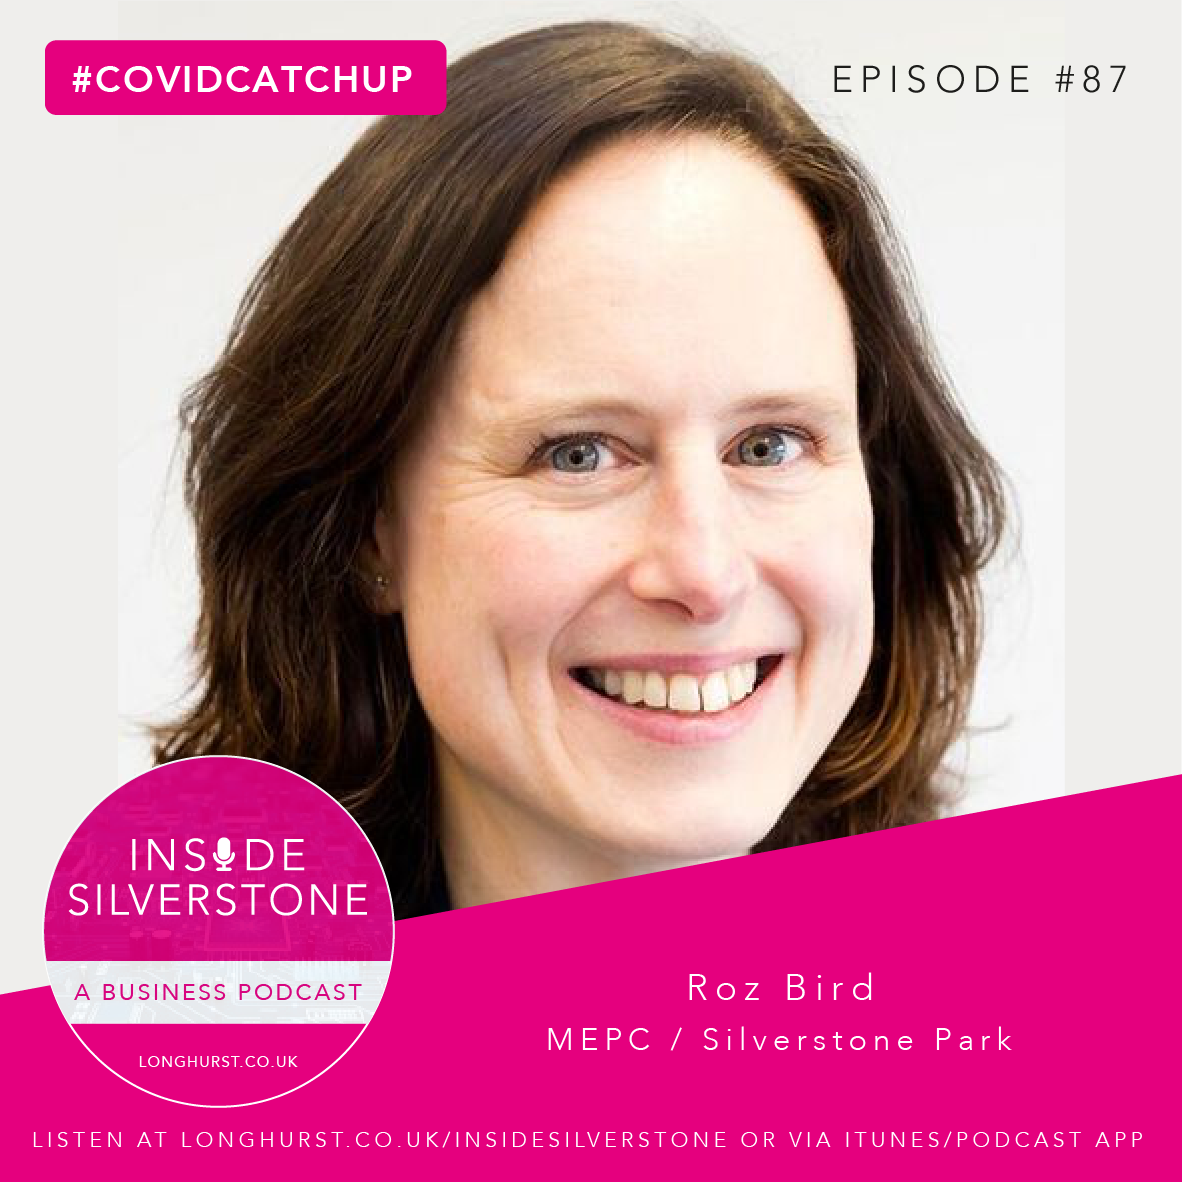 Roz Bird, Commercial Director MEPC & Silverstone Park